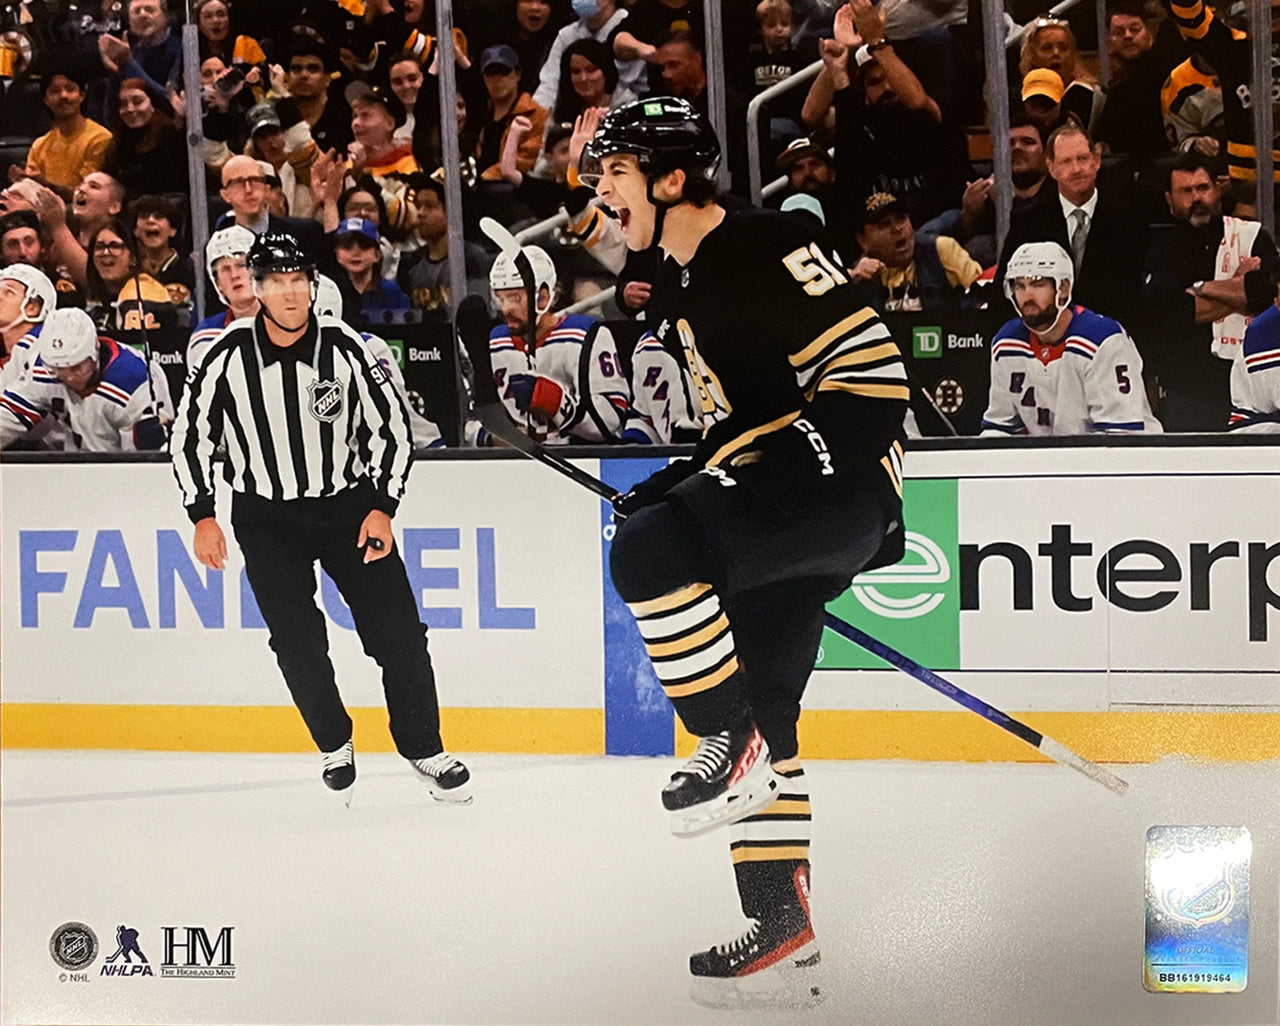 Matthew Poitras Celebration Boston Bruins 16" x 20" Hockey Photo